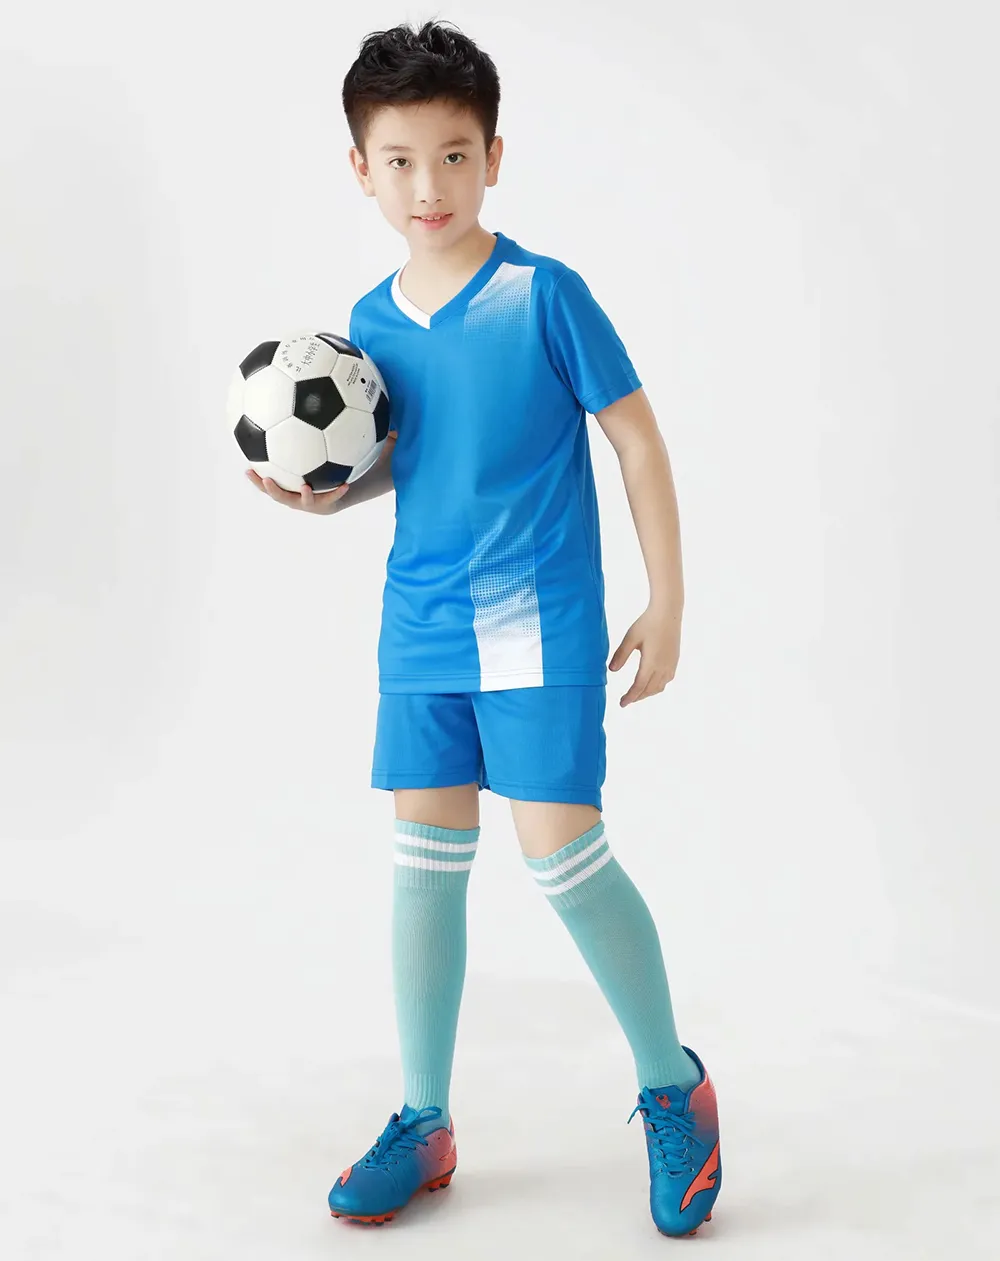 Jessie_kicks #G461 LJR aiir joordan 5 Design 2021 Fashion Jerseys Kids Clothing Ourtdoor Sport